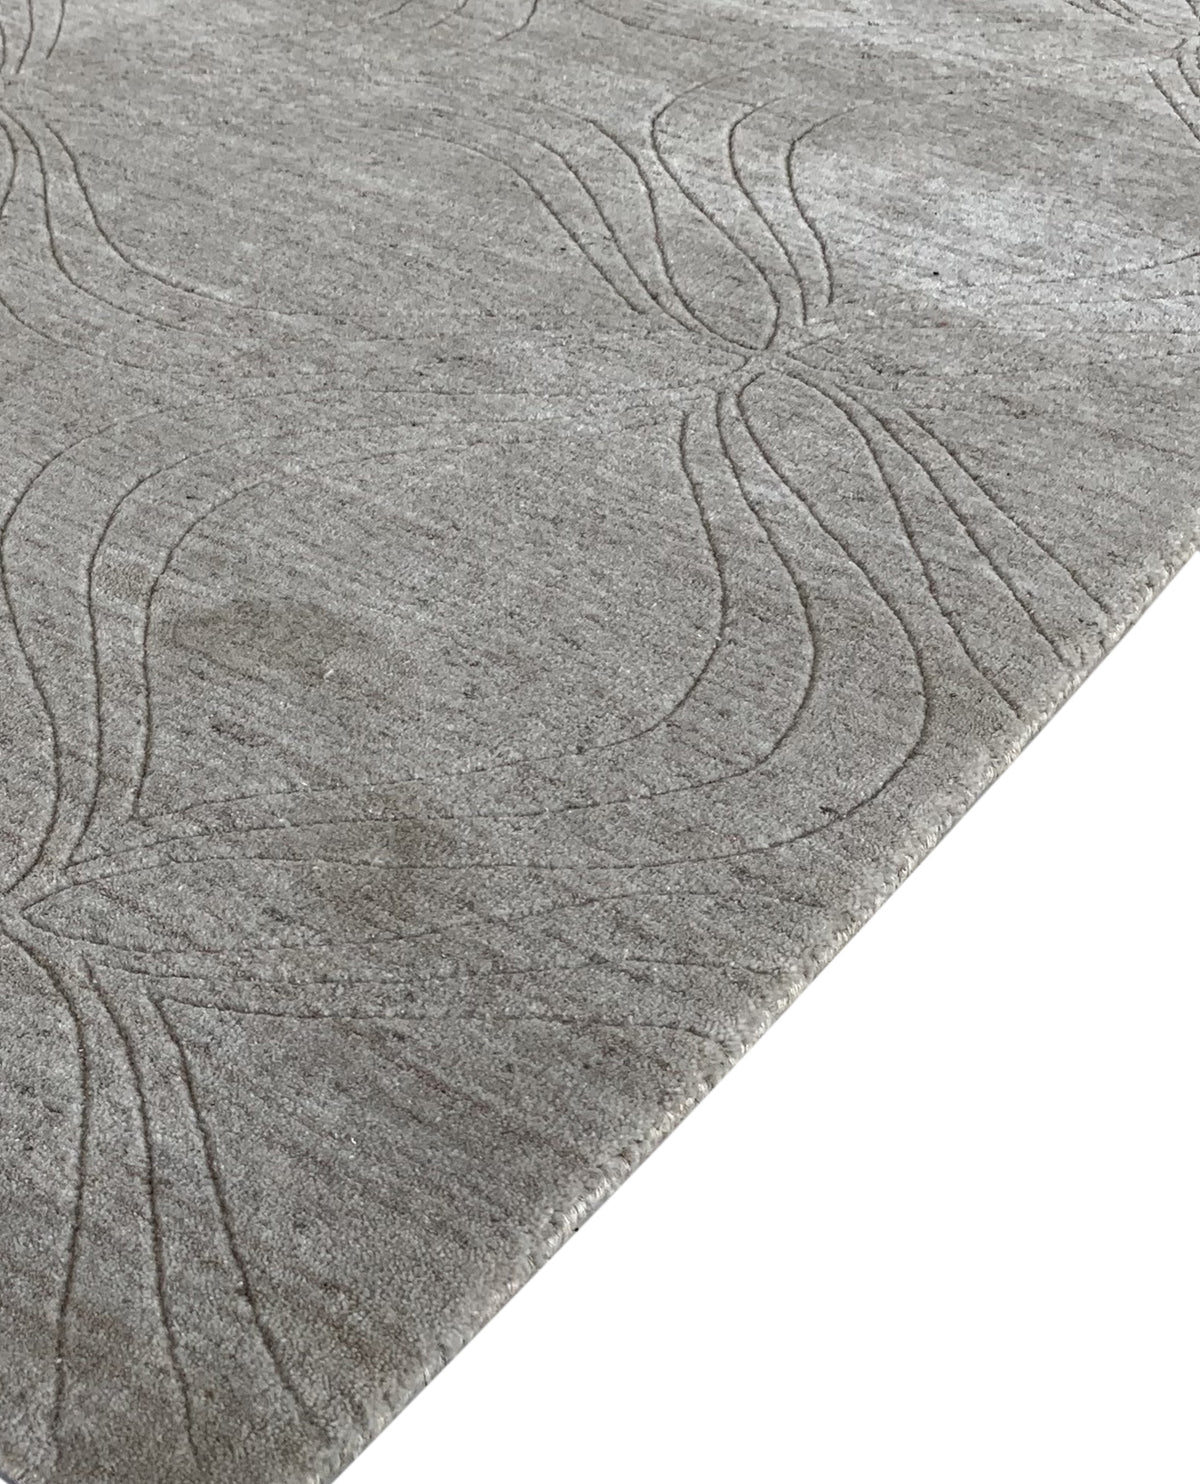 Rugslane Plain Textured Wool Viscose Mix Textured Self Damask Design Silver Grey  Color Carpet 4.7ft X 5.5ft